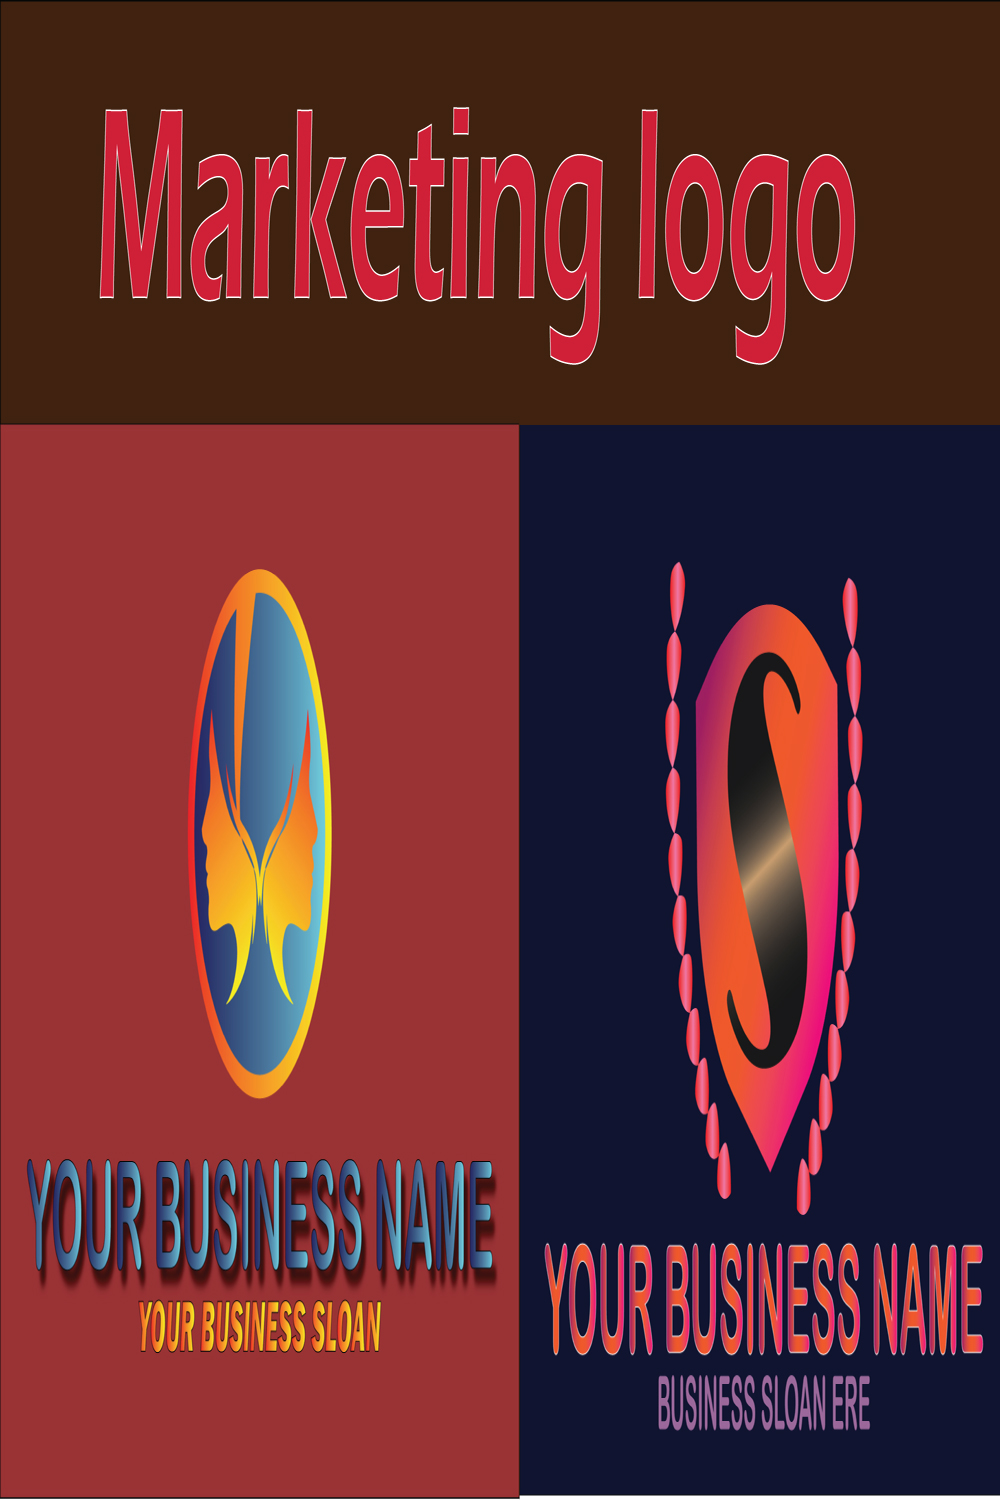 marketing logo pinterest preview image.